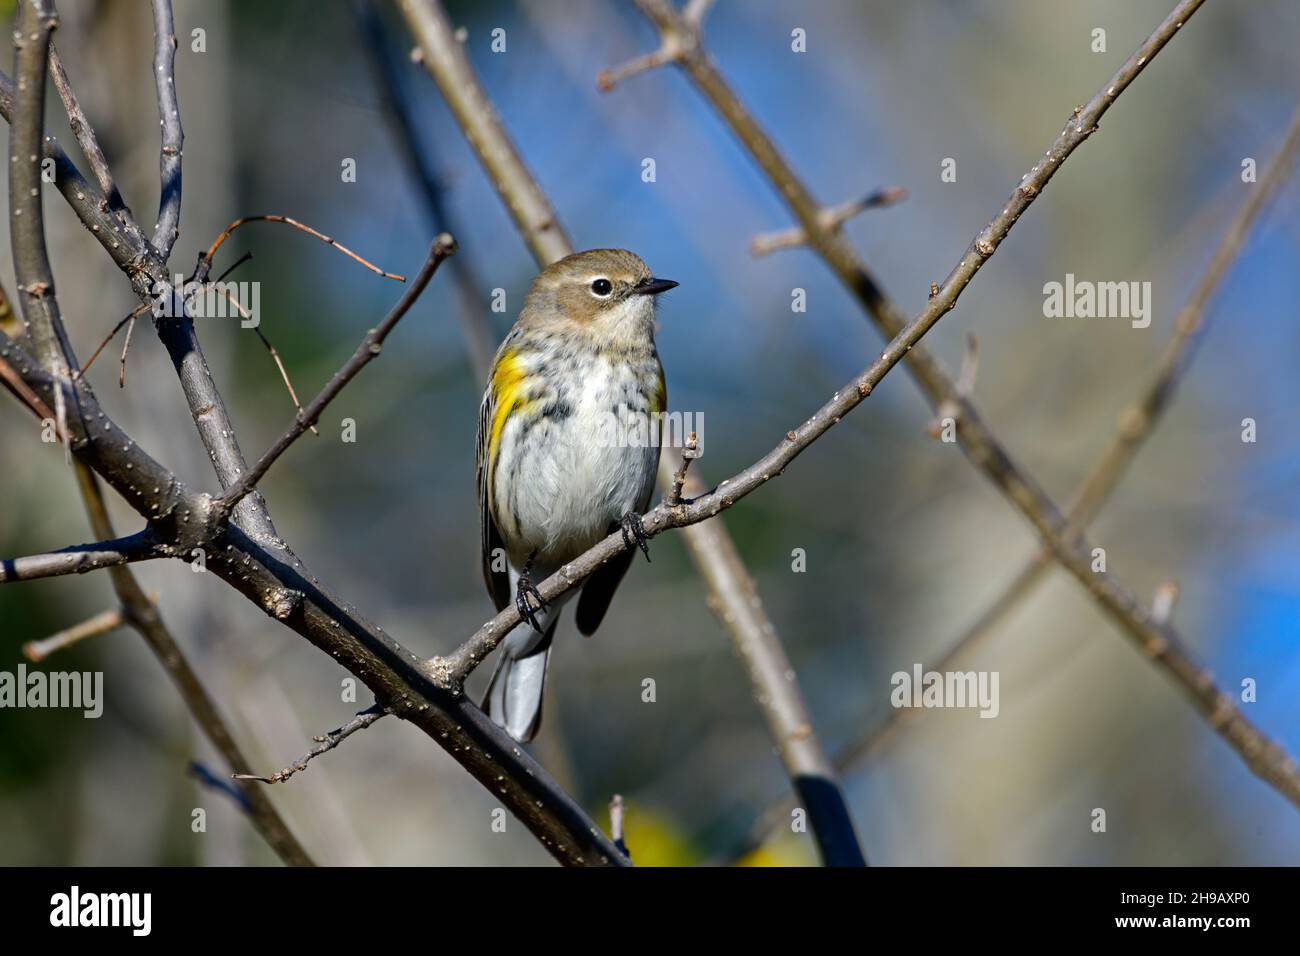 Yellow-rumped warbler - Setophaga coronata - tooking toward camara while perched on a branch Stock Photo